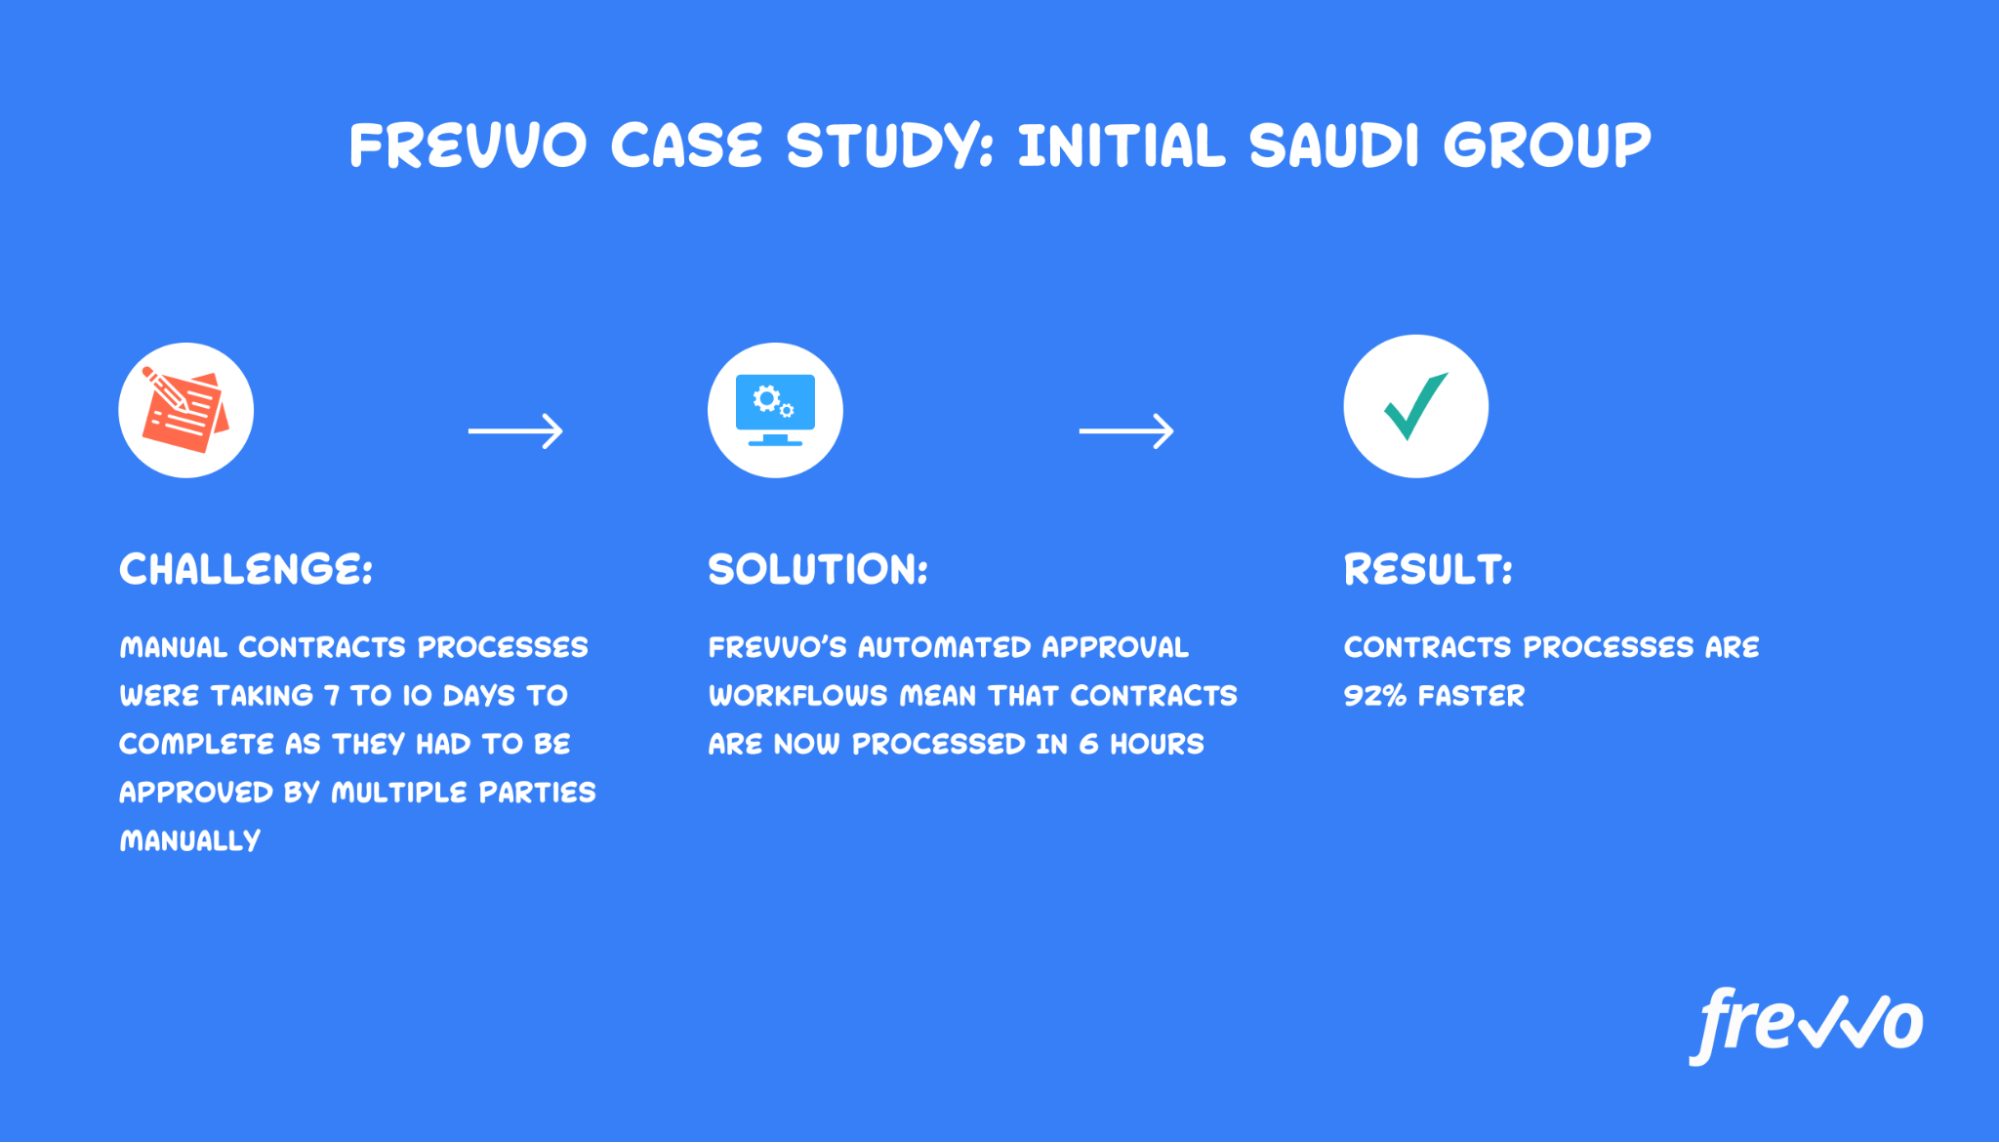 Initial Saudi Group case study using frevvo